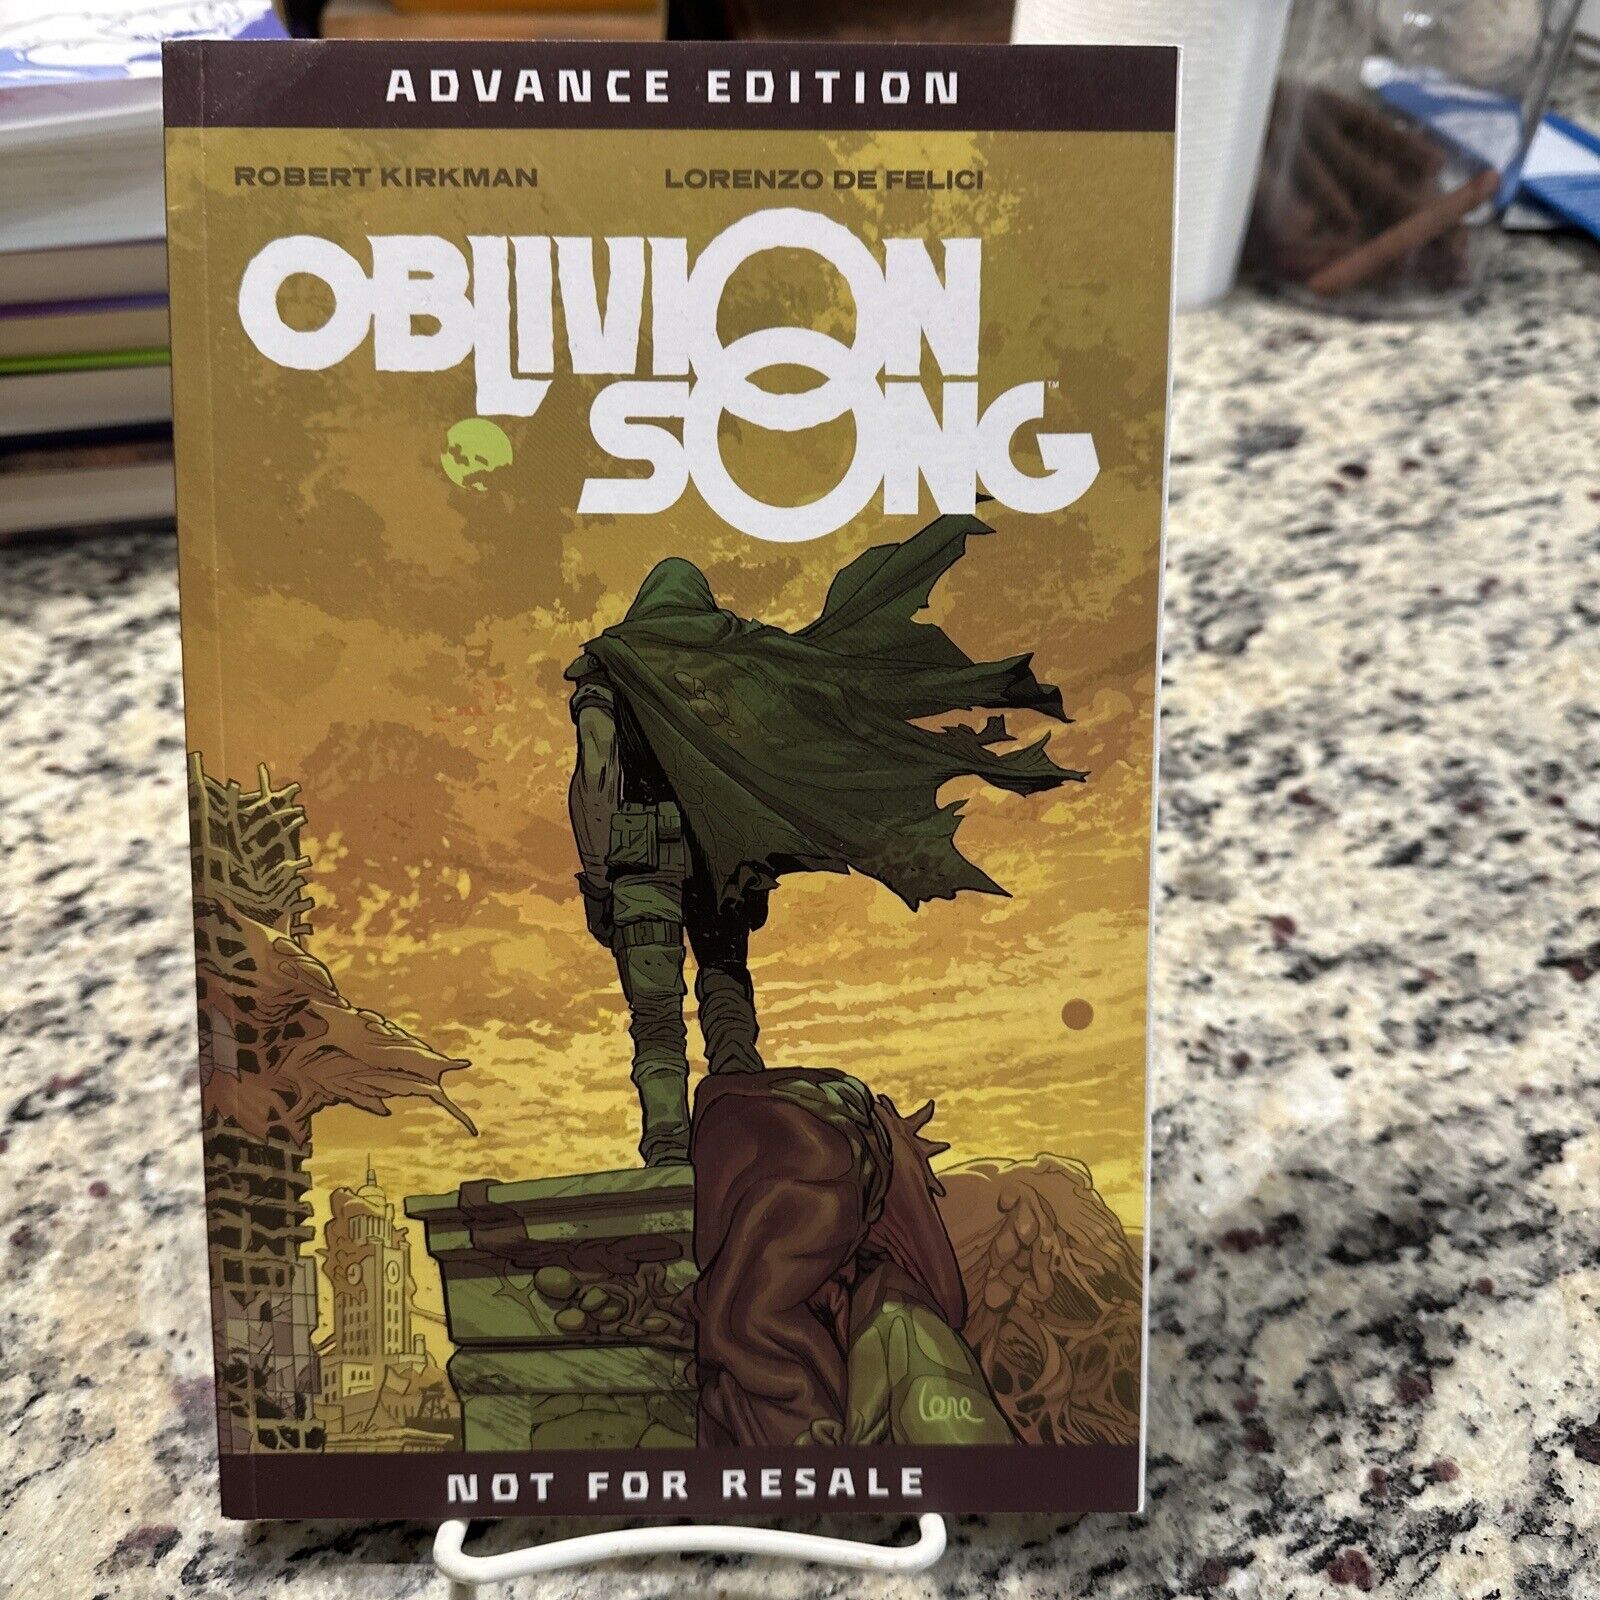 Oblivion Song TPB Retail Advanced Edition Image 2017 Kirkman/De Felici Sci-fi